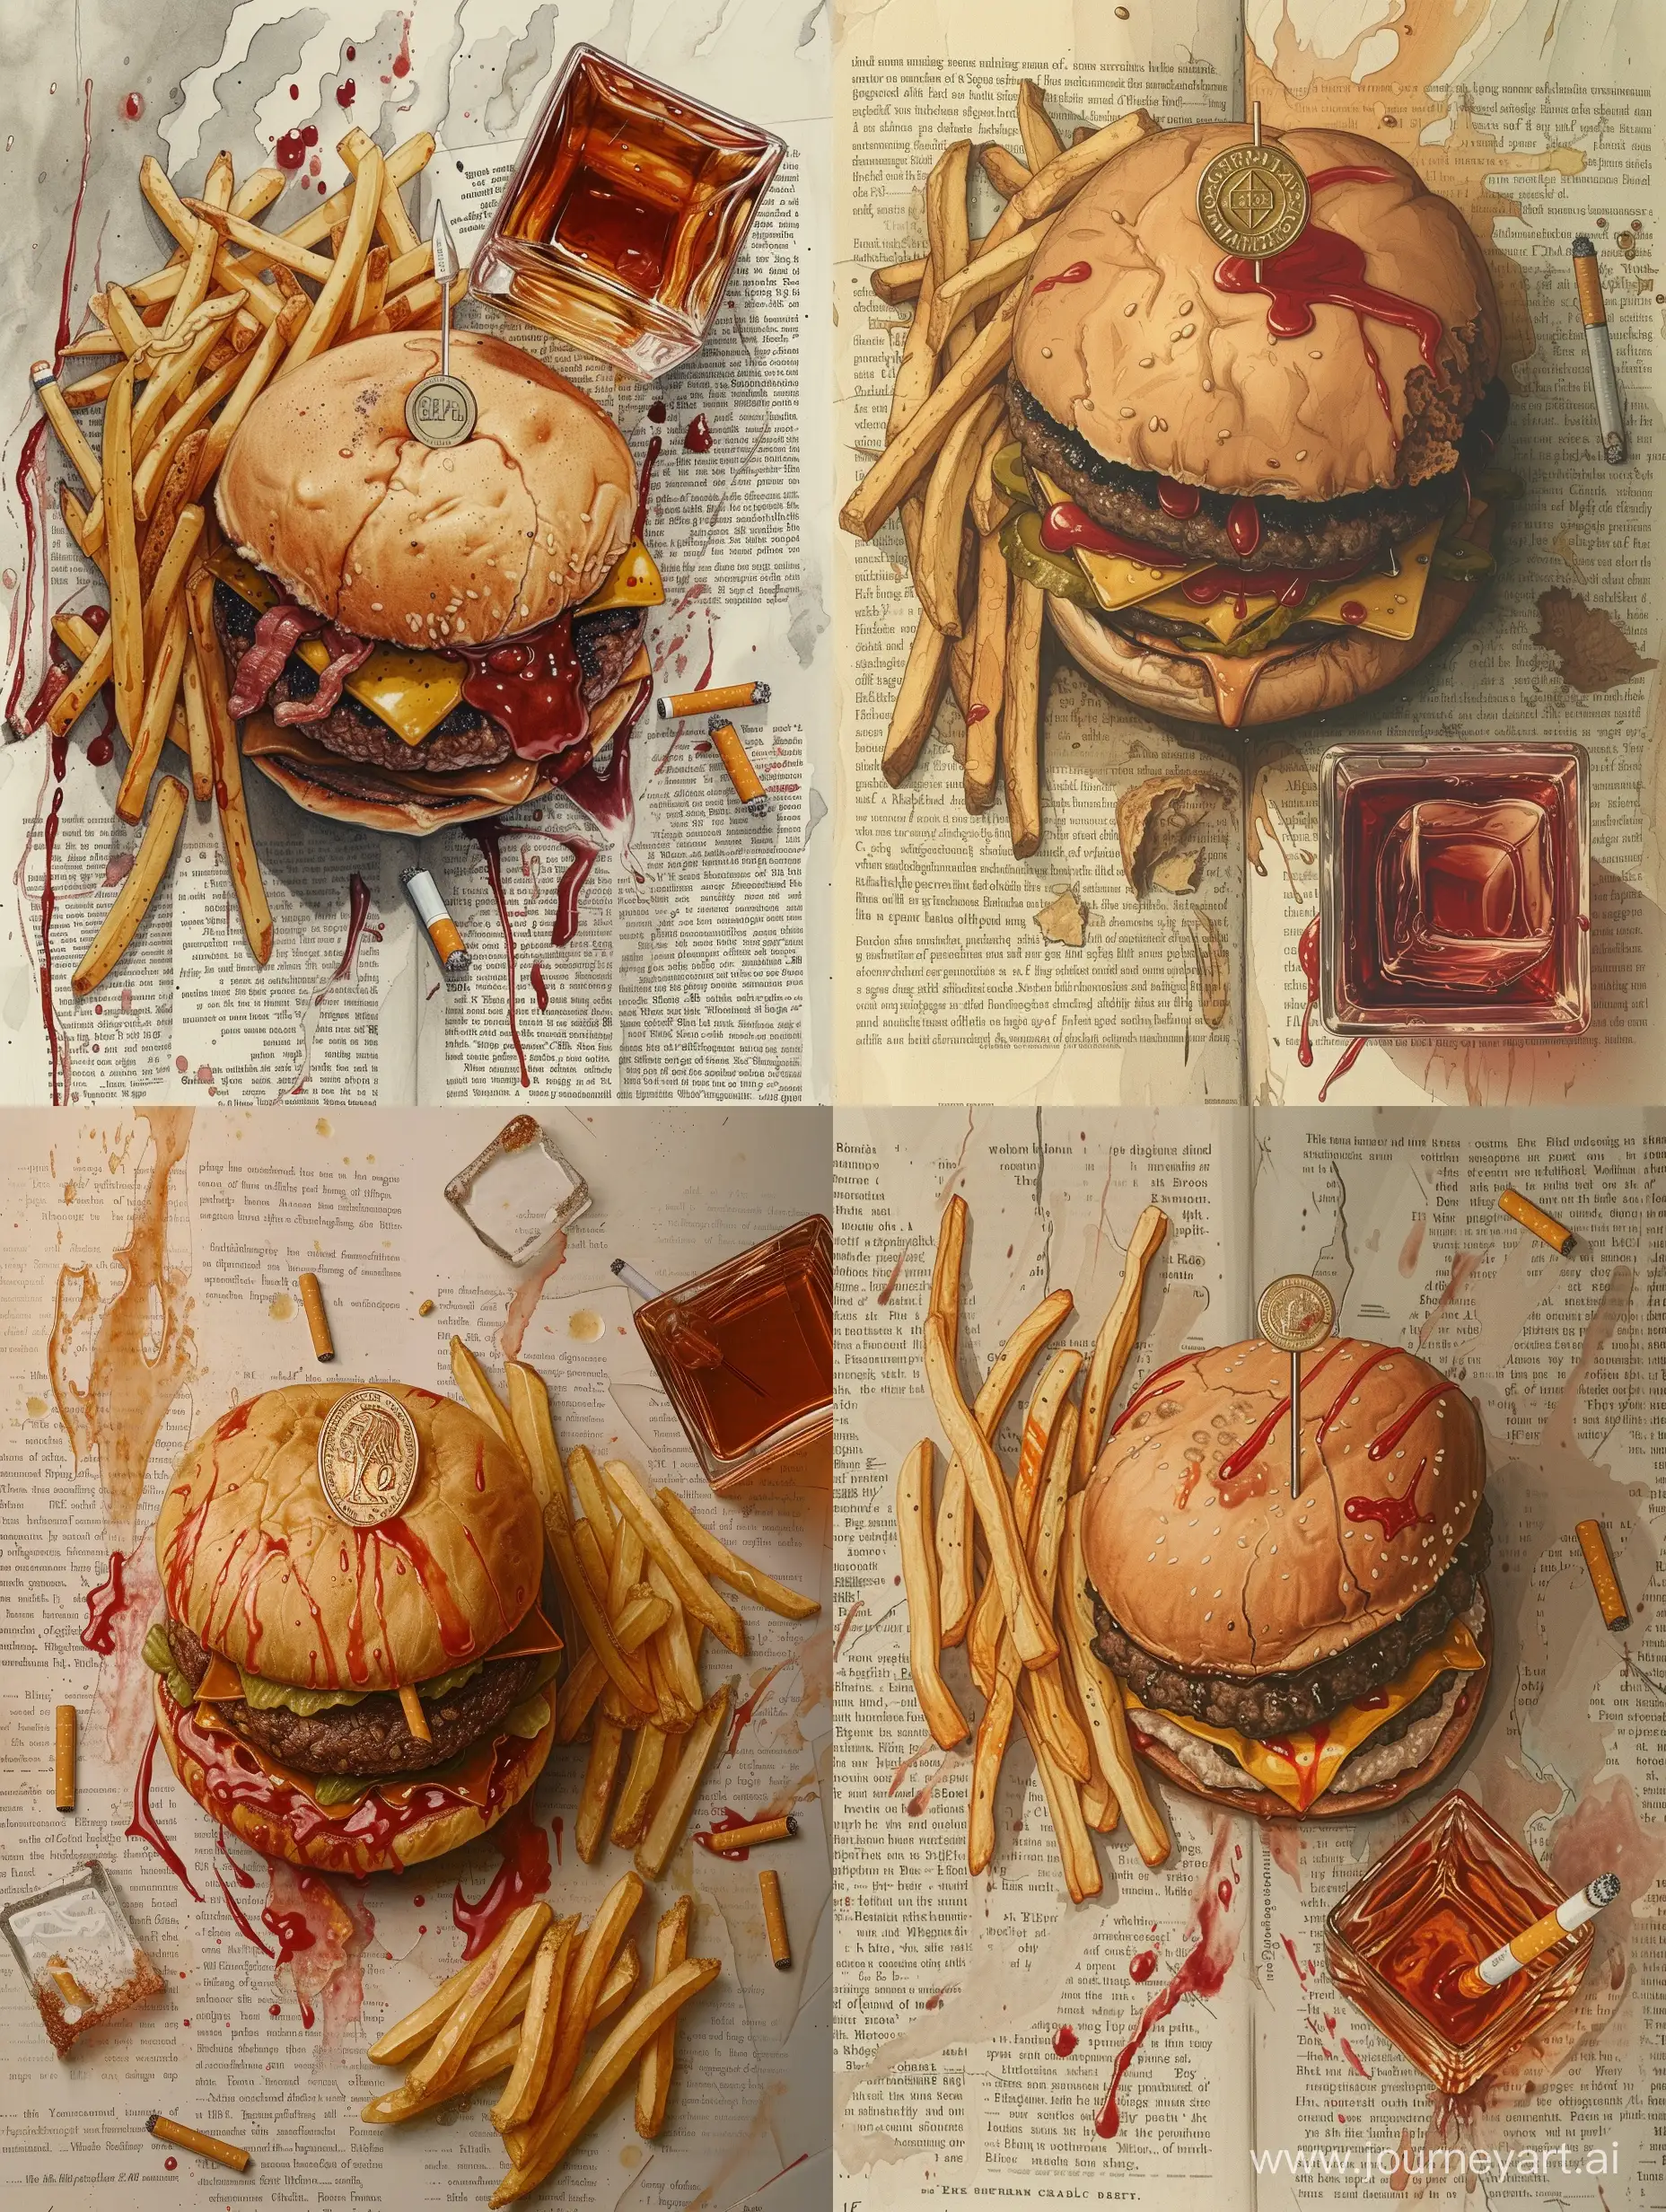 Indulgent-Burger-with-Medal-Fries-and-Bourbon-Ralph-Steadman-Inspired-Art